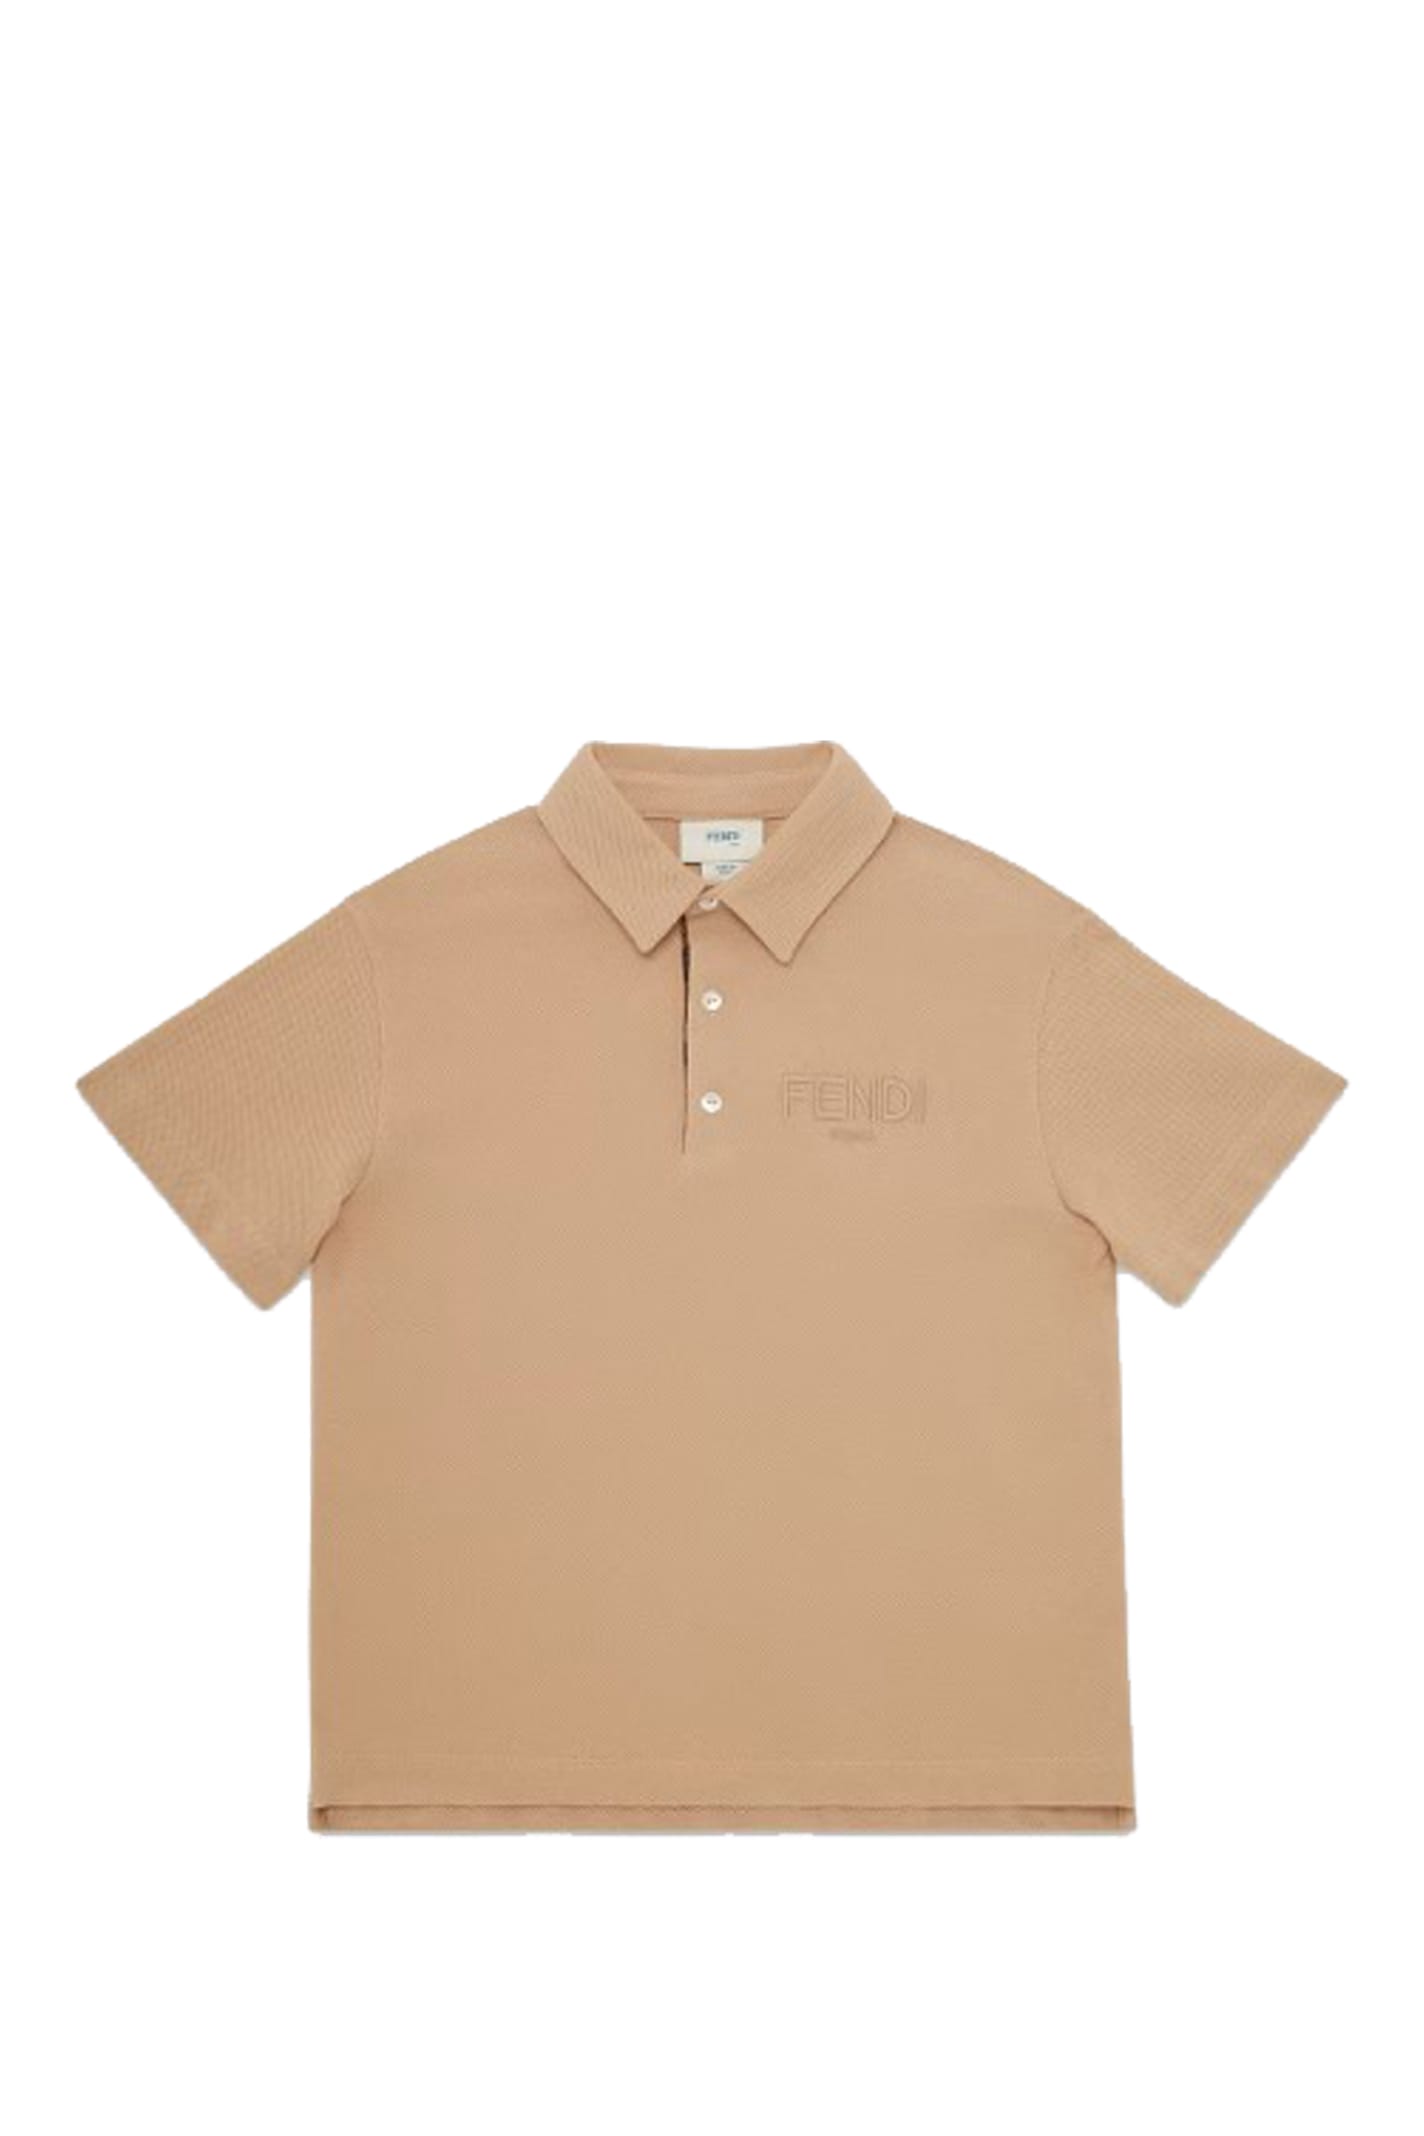 Shop Fendi Junior Polo Shirt In Beige